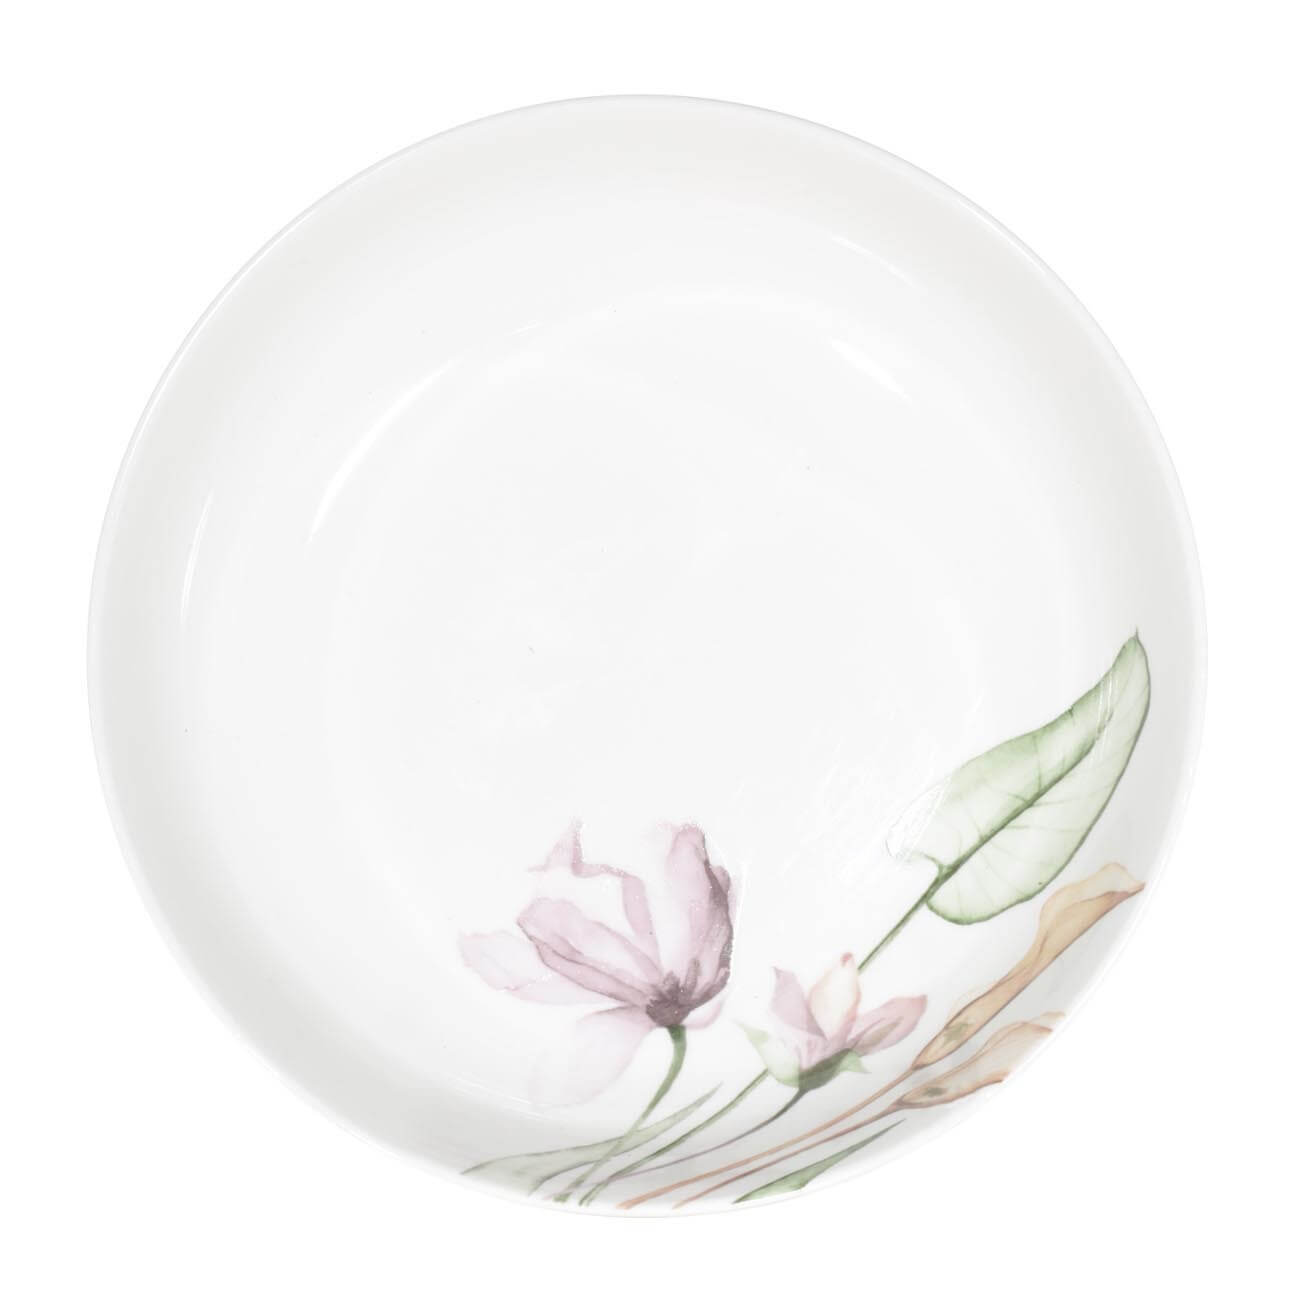 Тарелка обеденная, 27 см, фарфор N, белая, Великолепный цветок, Gorgeous flower